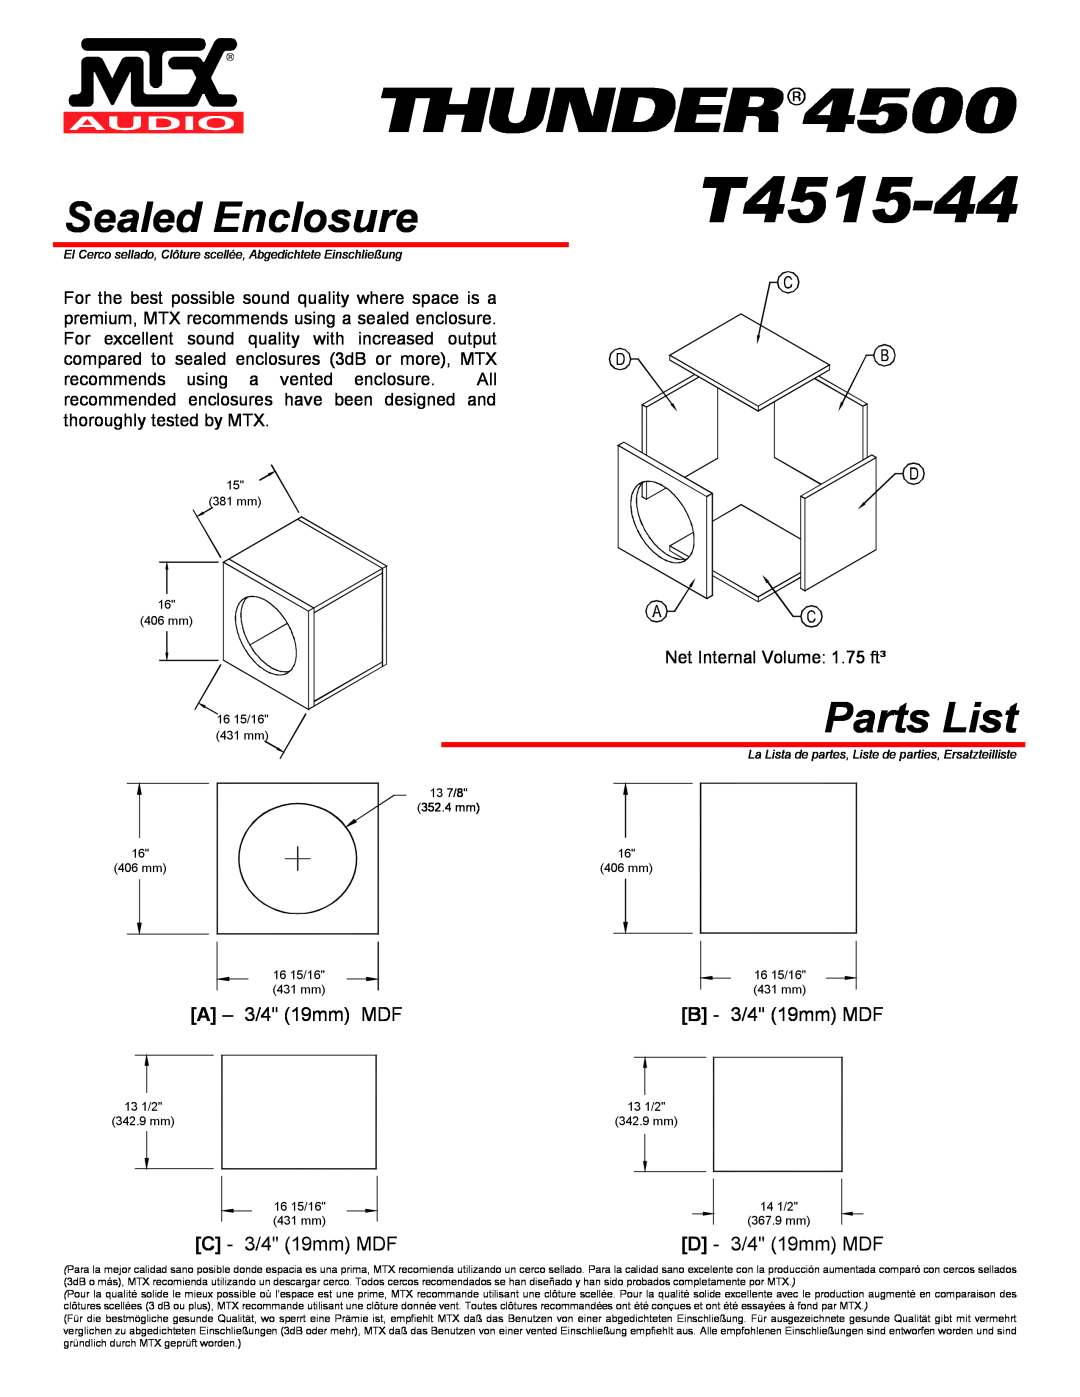 MTX Audio T4515-44 Sealed Enclosure, Parts List, A - 3/4 19mm MDF, B - 3/4 19mm MDF, C - 3/4 19mm MDF, D - 3/4 19mm MDF 